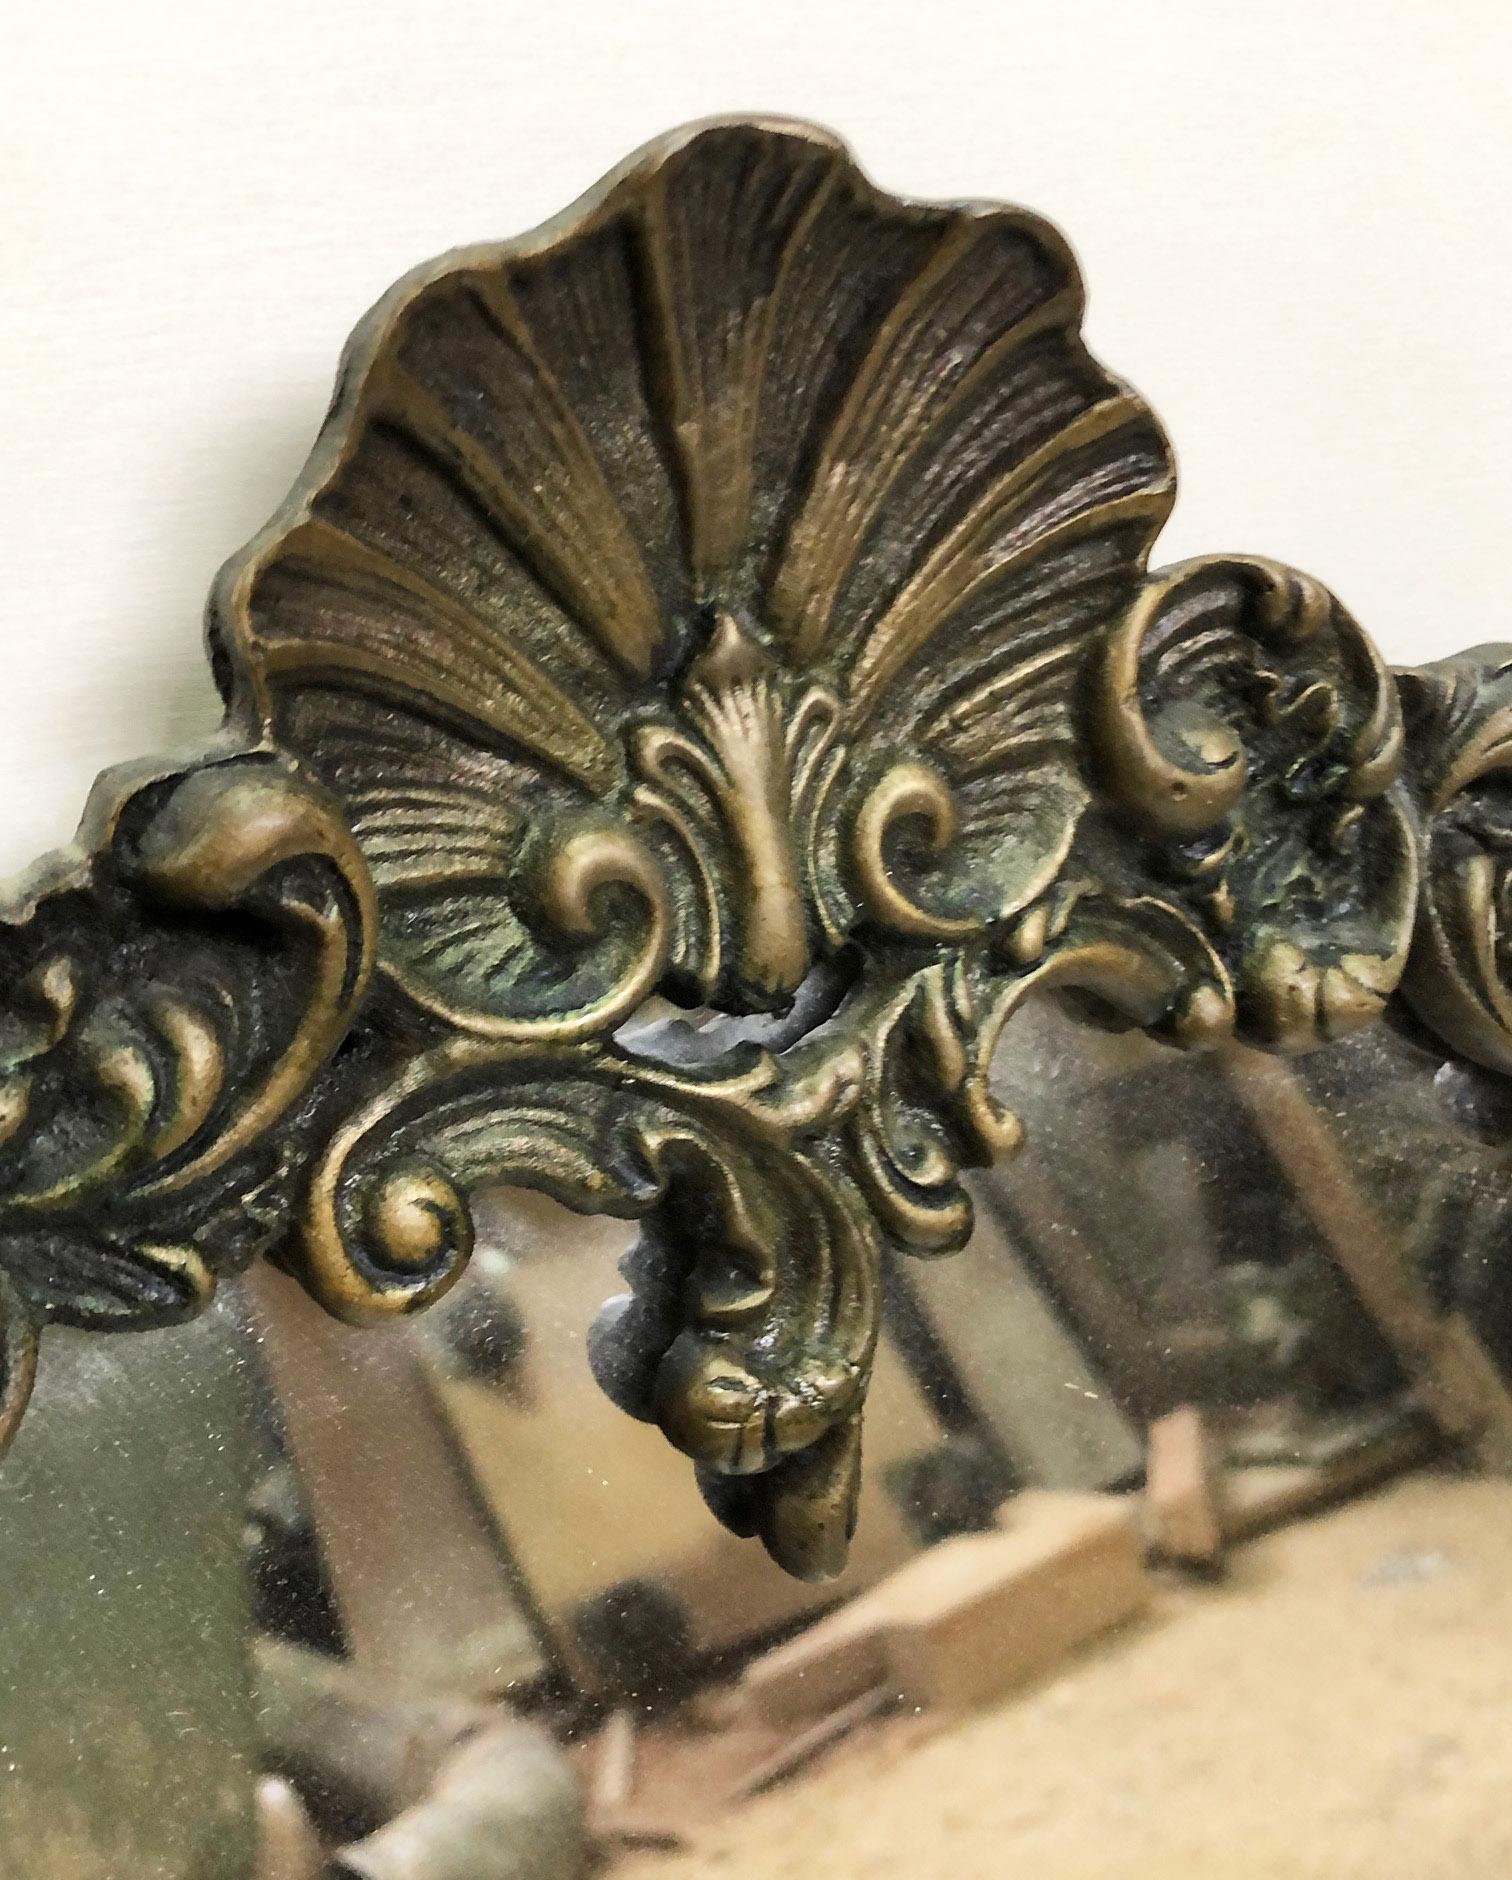 Brass mirror, 1940s, original, Italian oval, elegant.
Brass exhibits its natural oxidation.